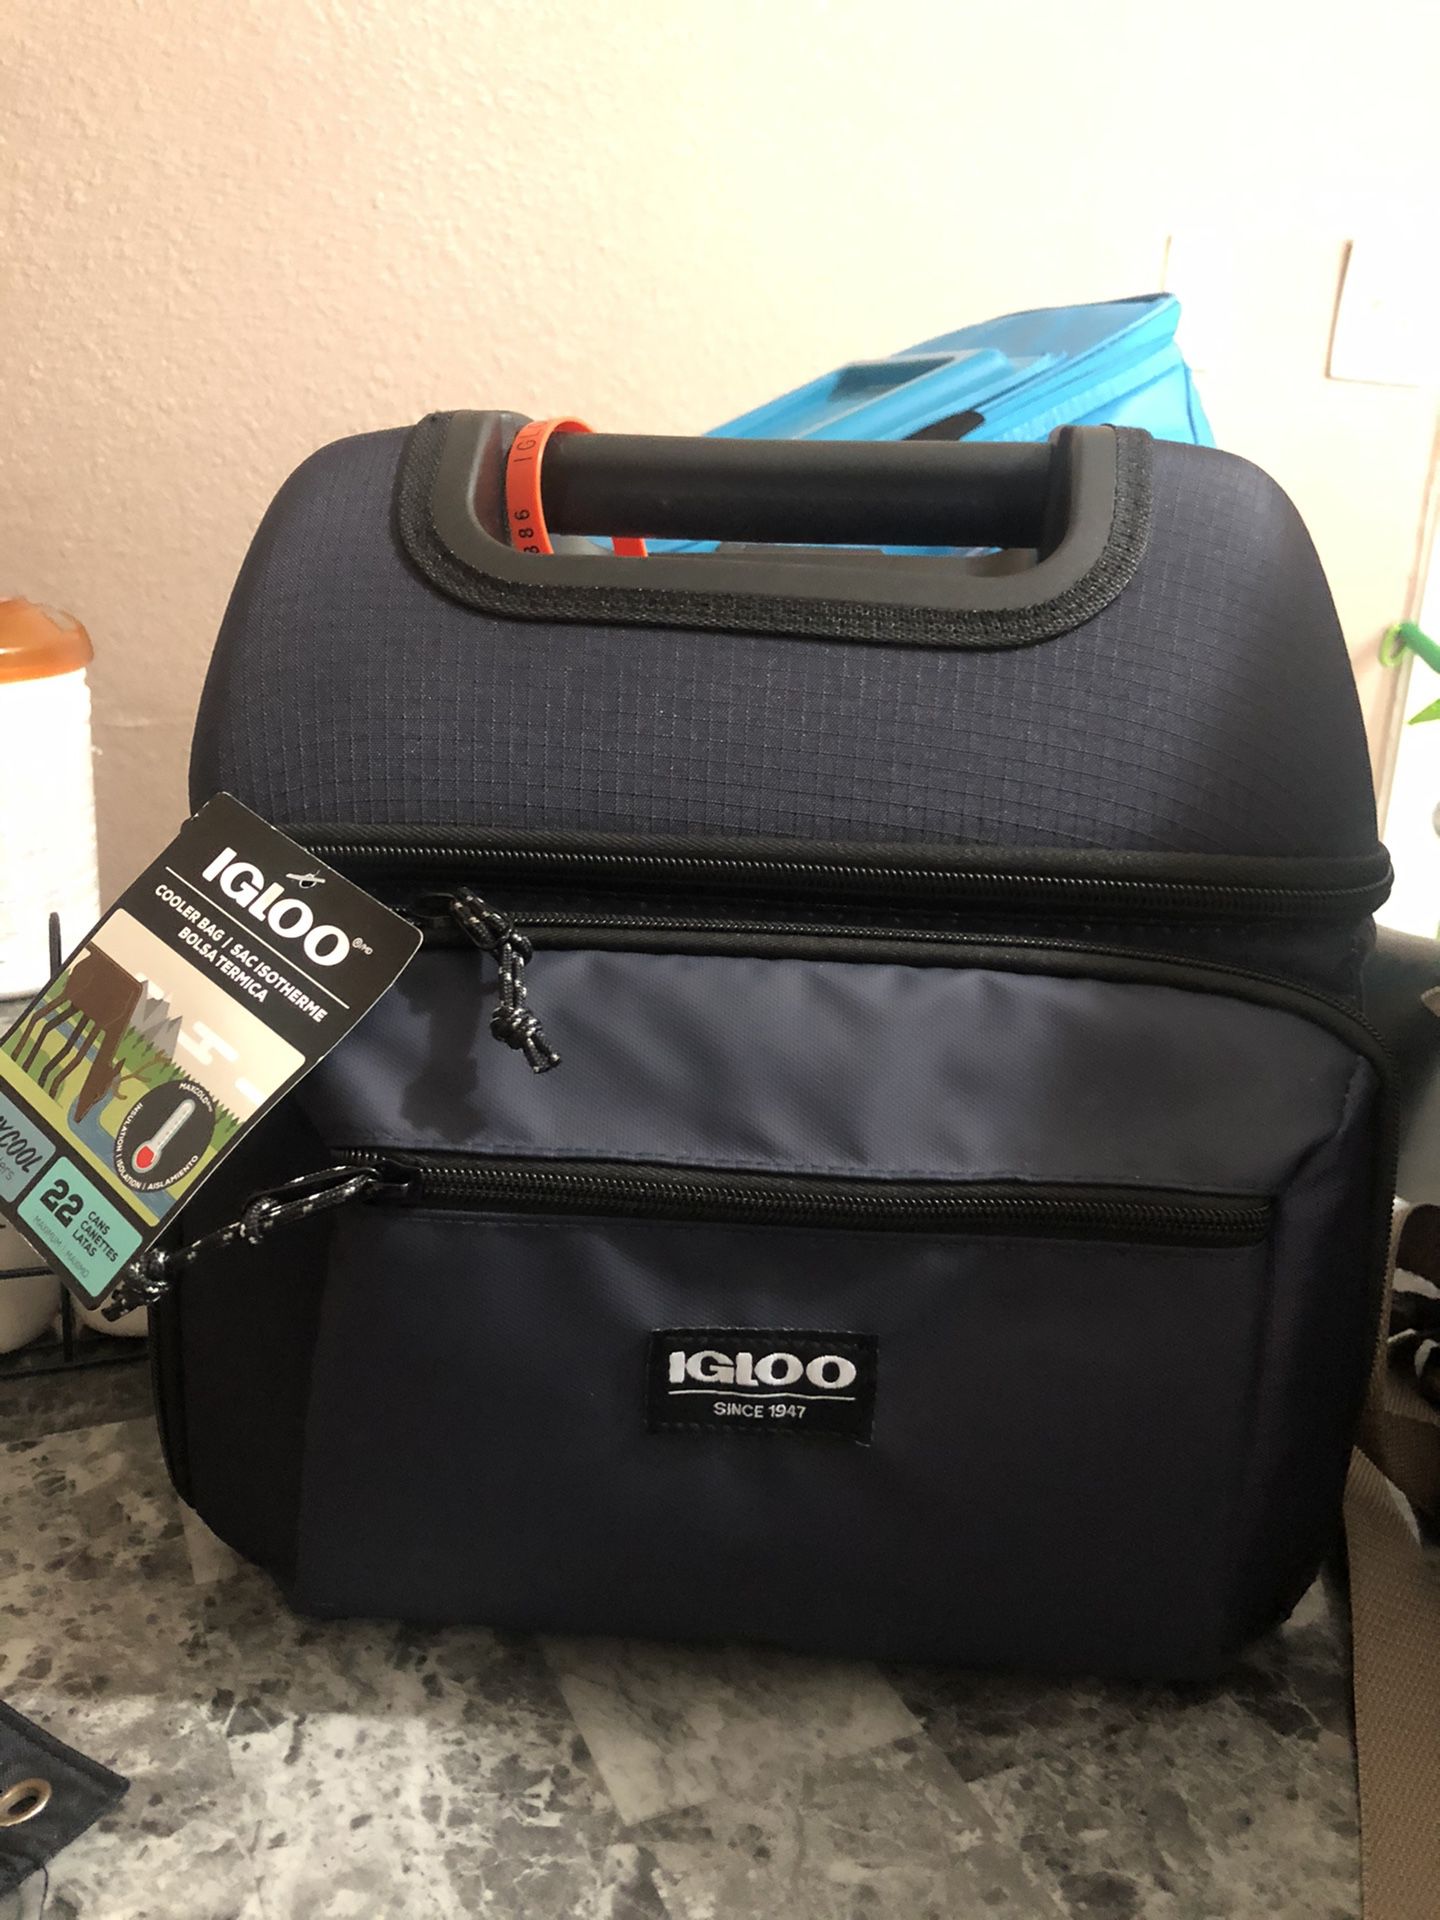 Igloo cooler bag